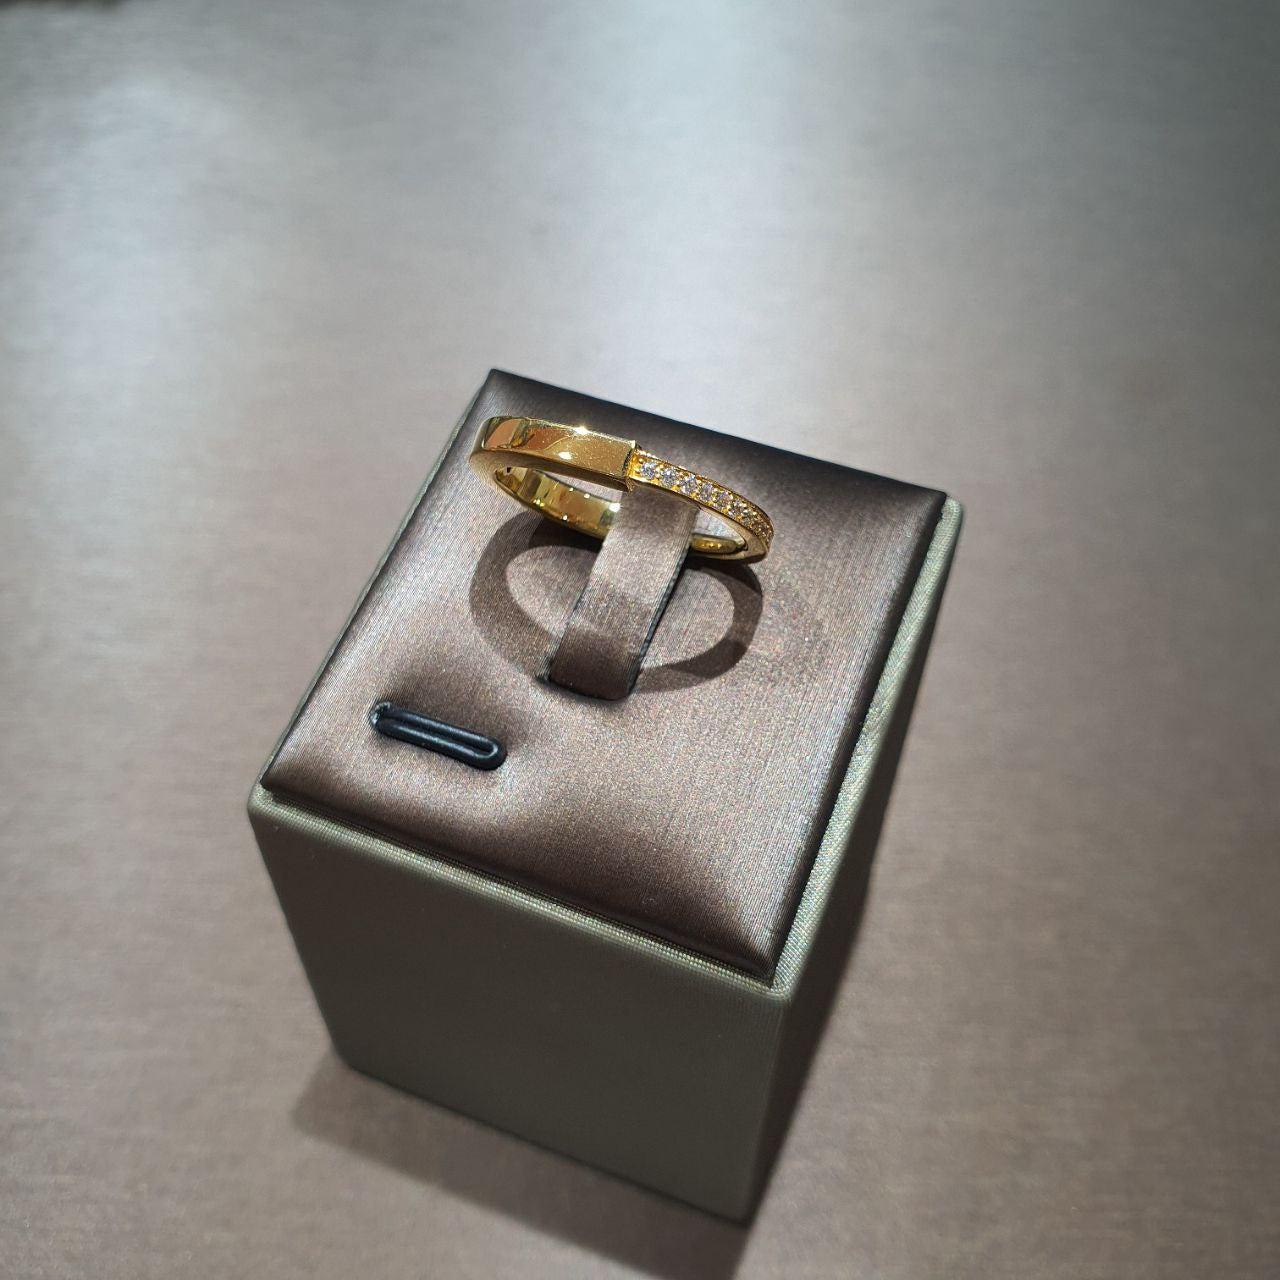 22K / 916 Gold Hollow U lock Ring, Different Design-Rings-Best Gold Shop